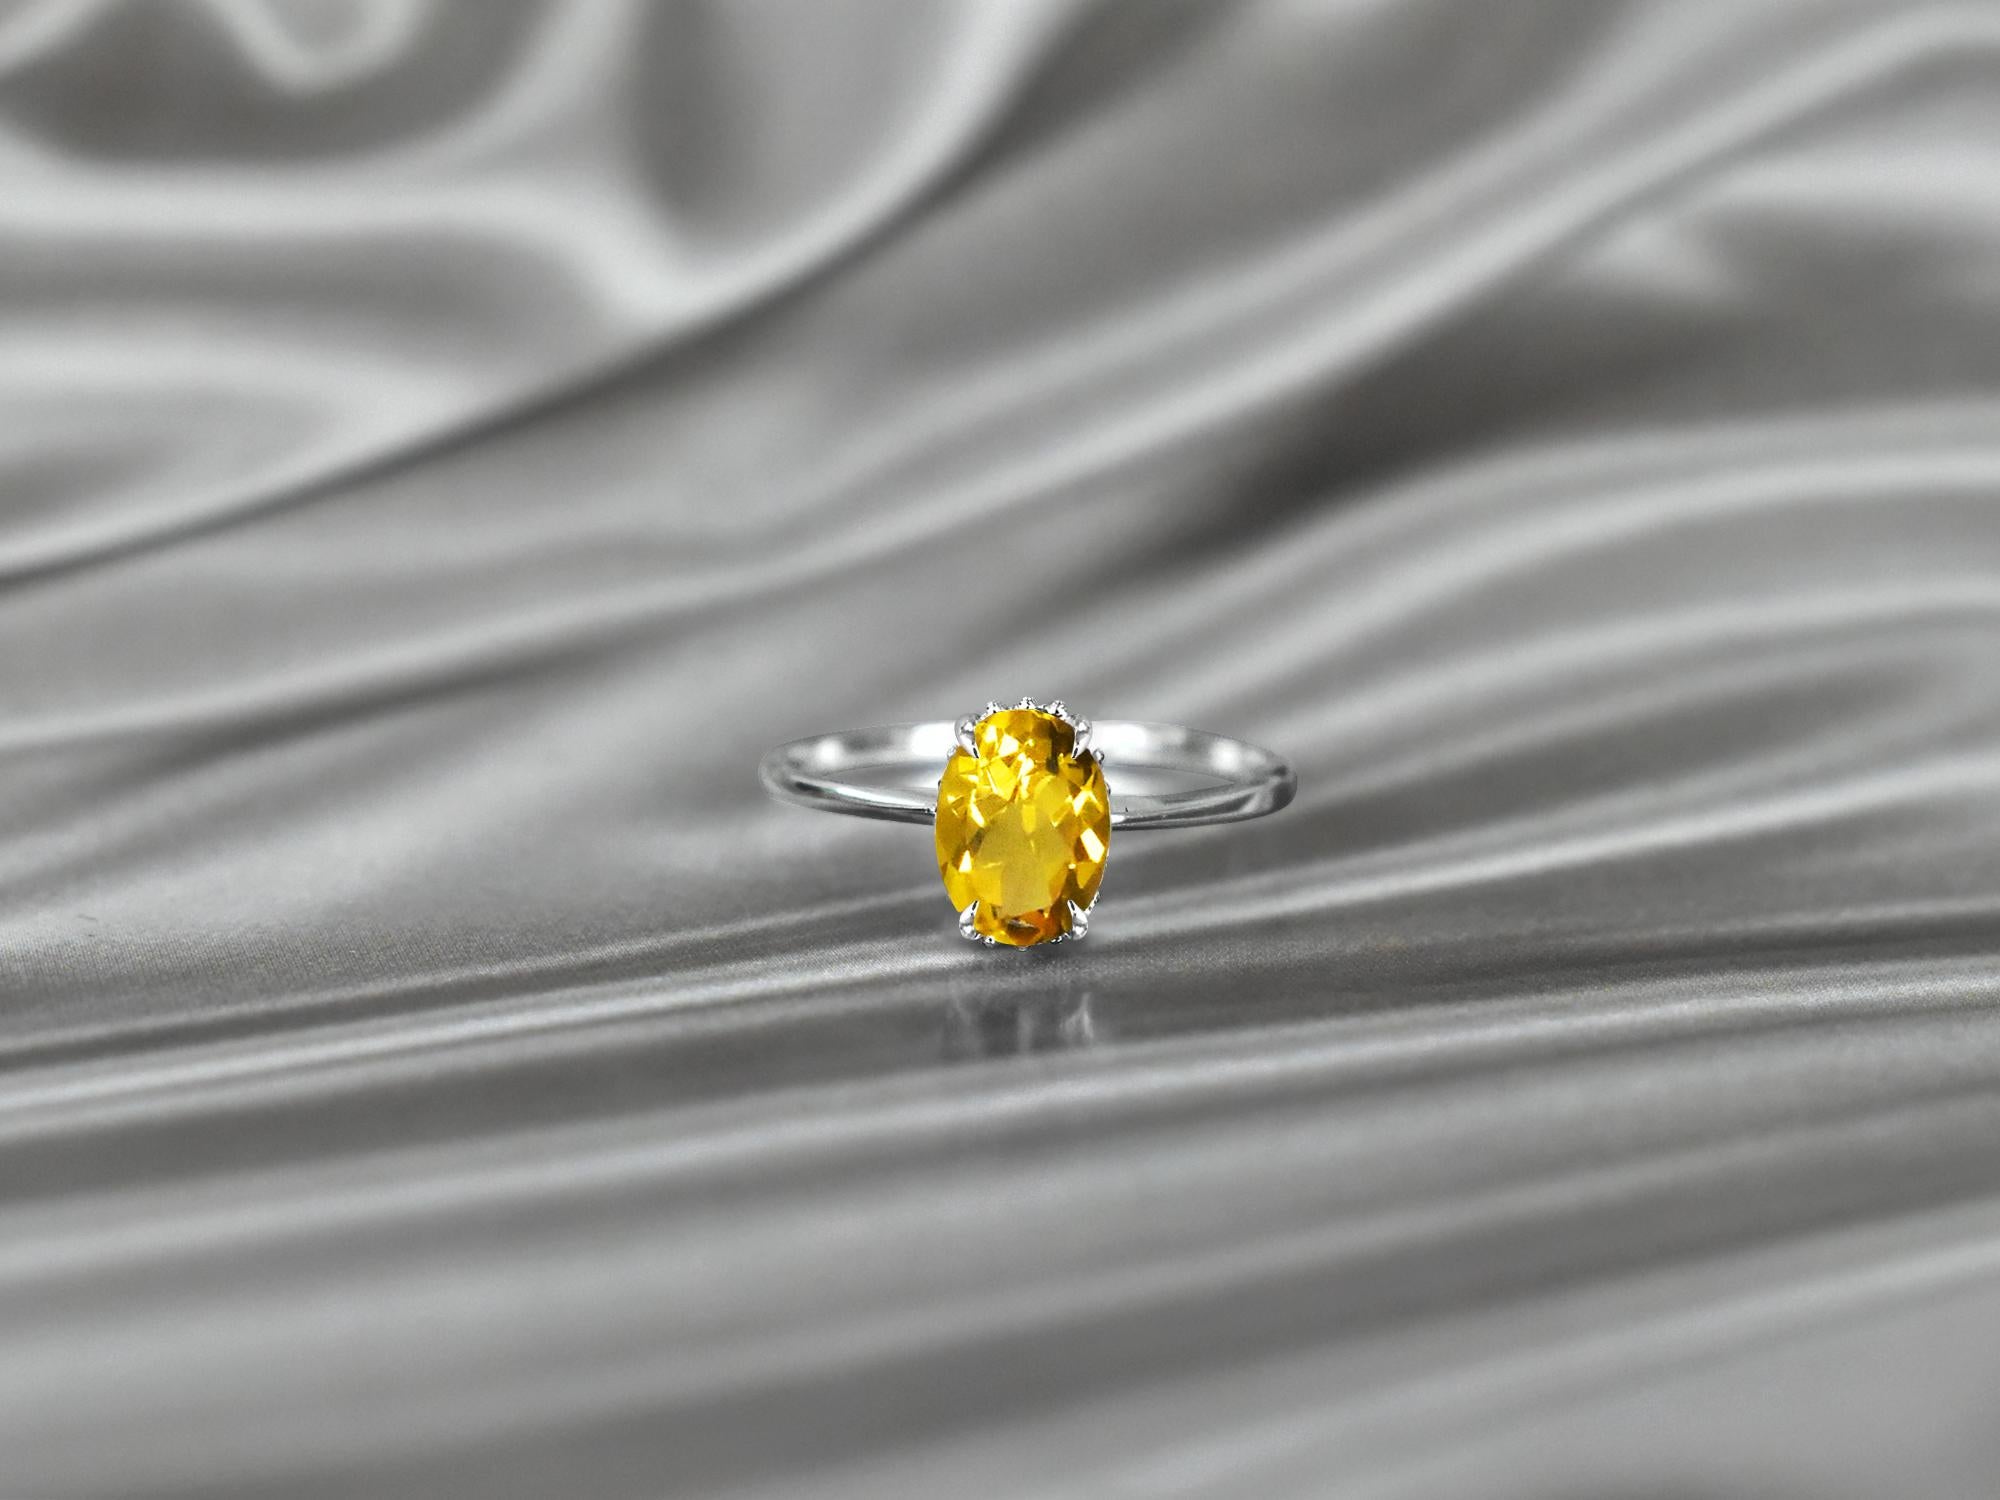 For Sale:  10k Gold Oval Gemstone 8x6 mm Oval Cut Gemstone Ring Gemstone Engagement Ring 6